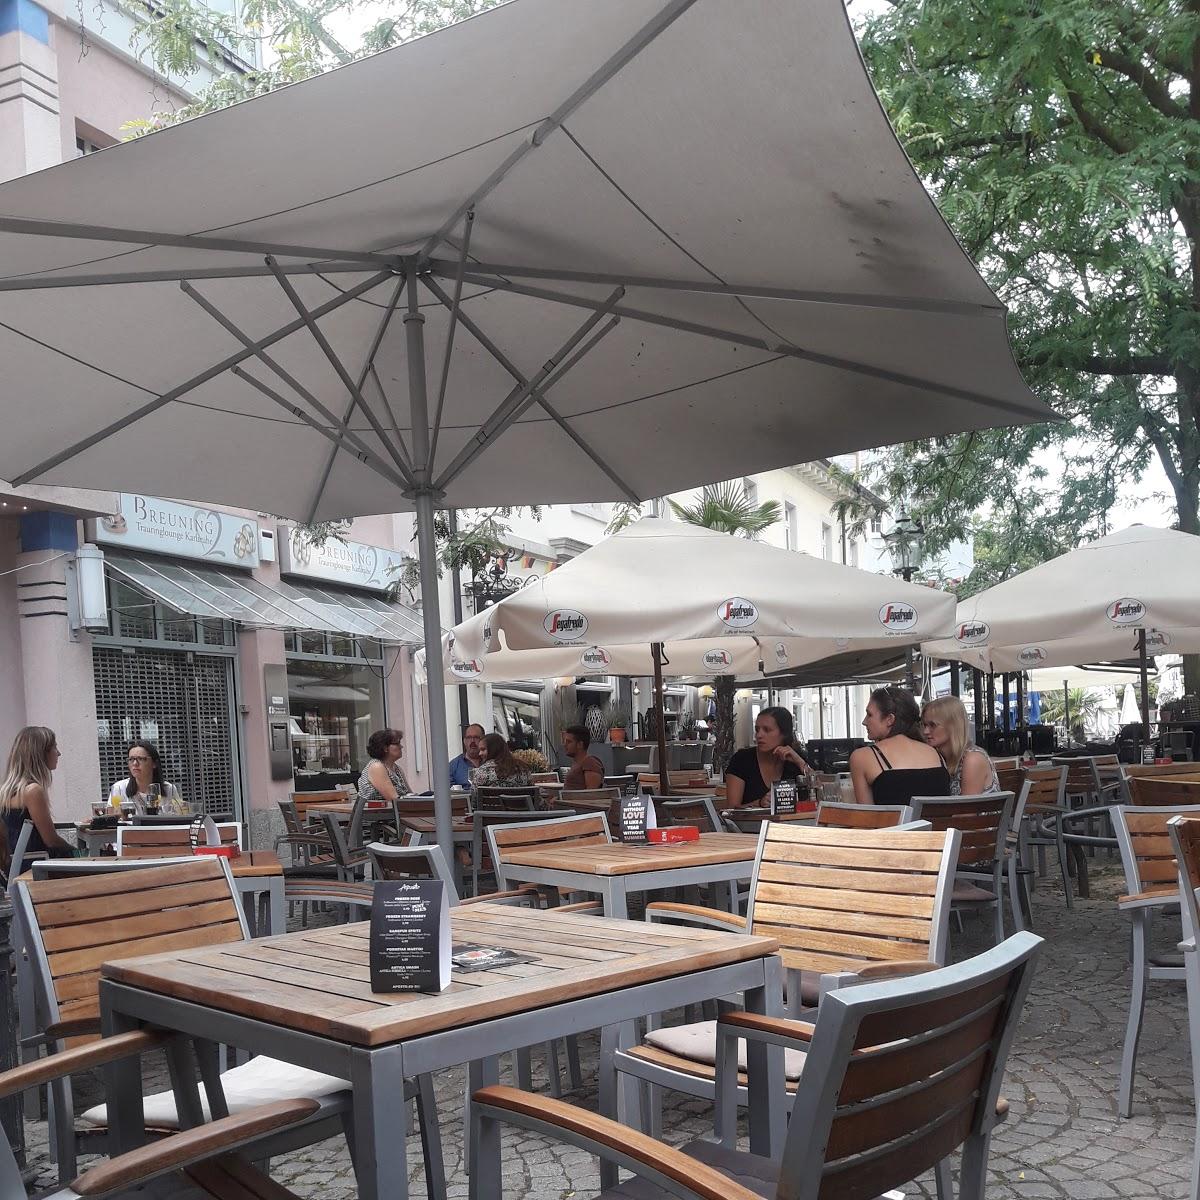 Restaurant "Litfaß" in Karlsruhe